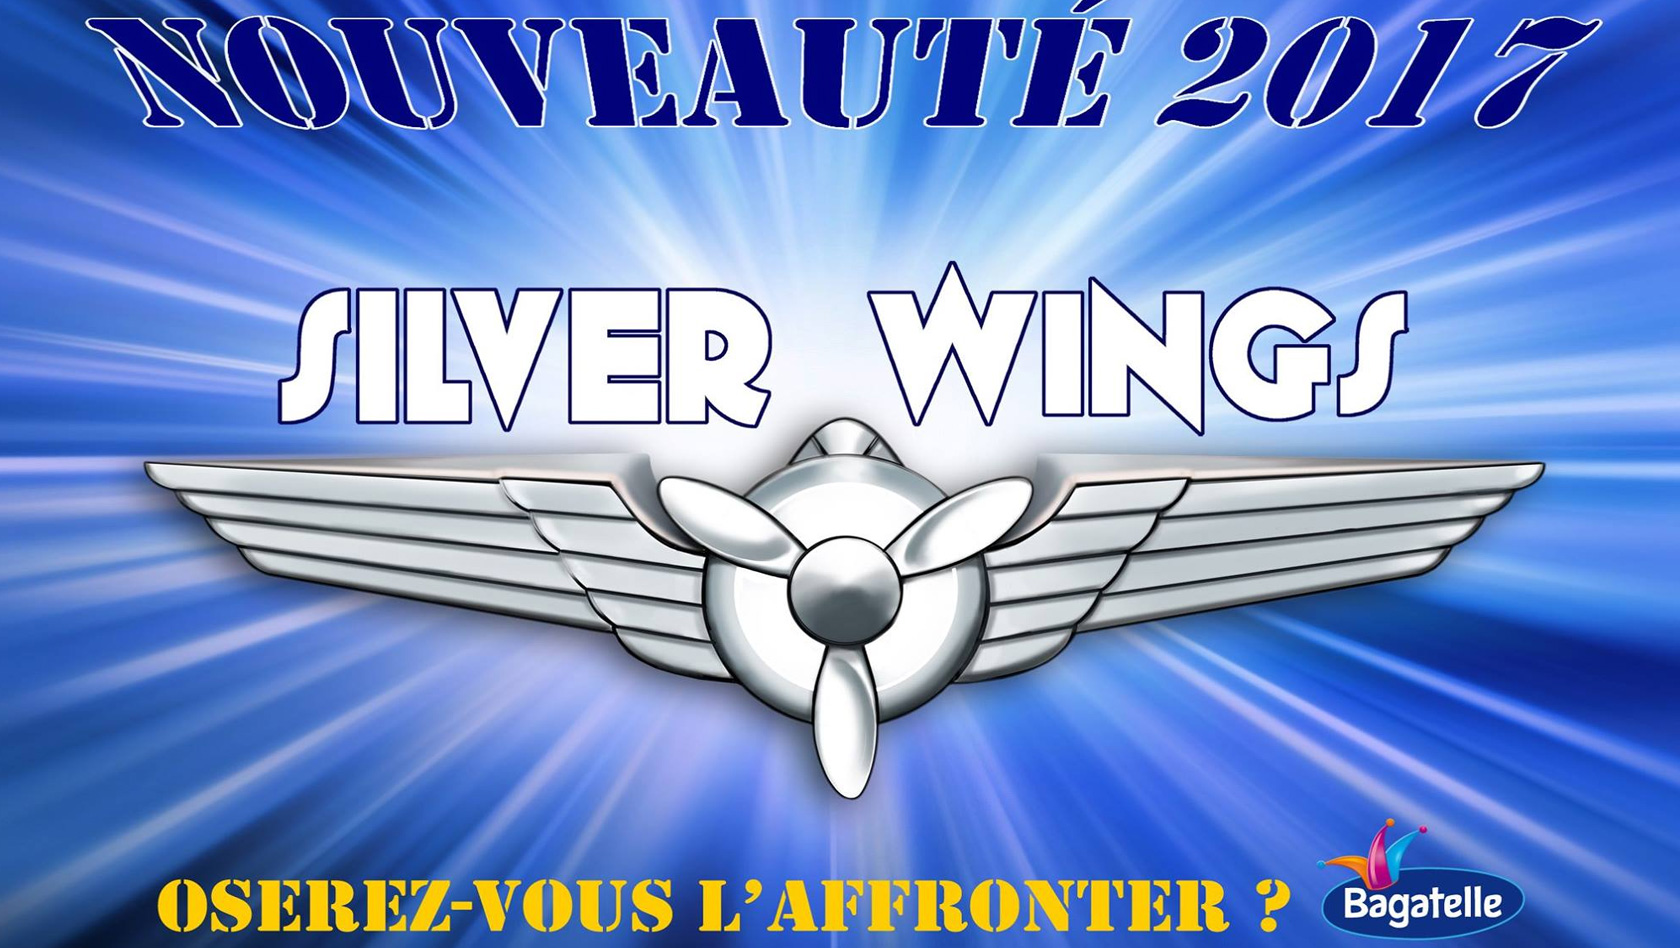 Parc Bagatelle 2017 - Silver Wings Ankündigung